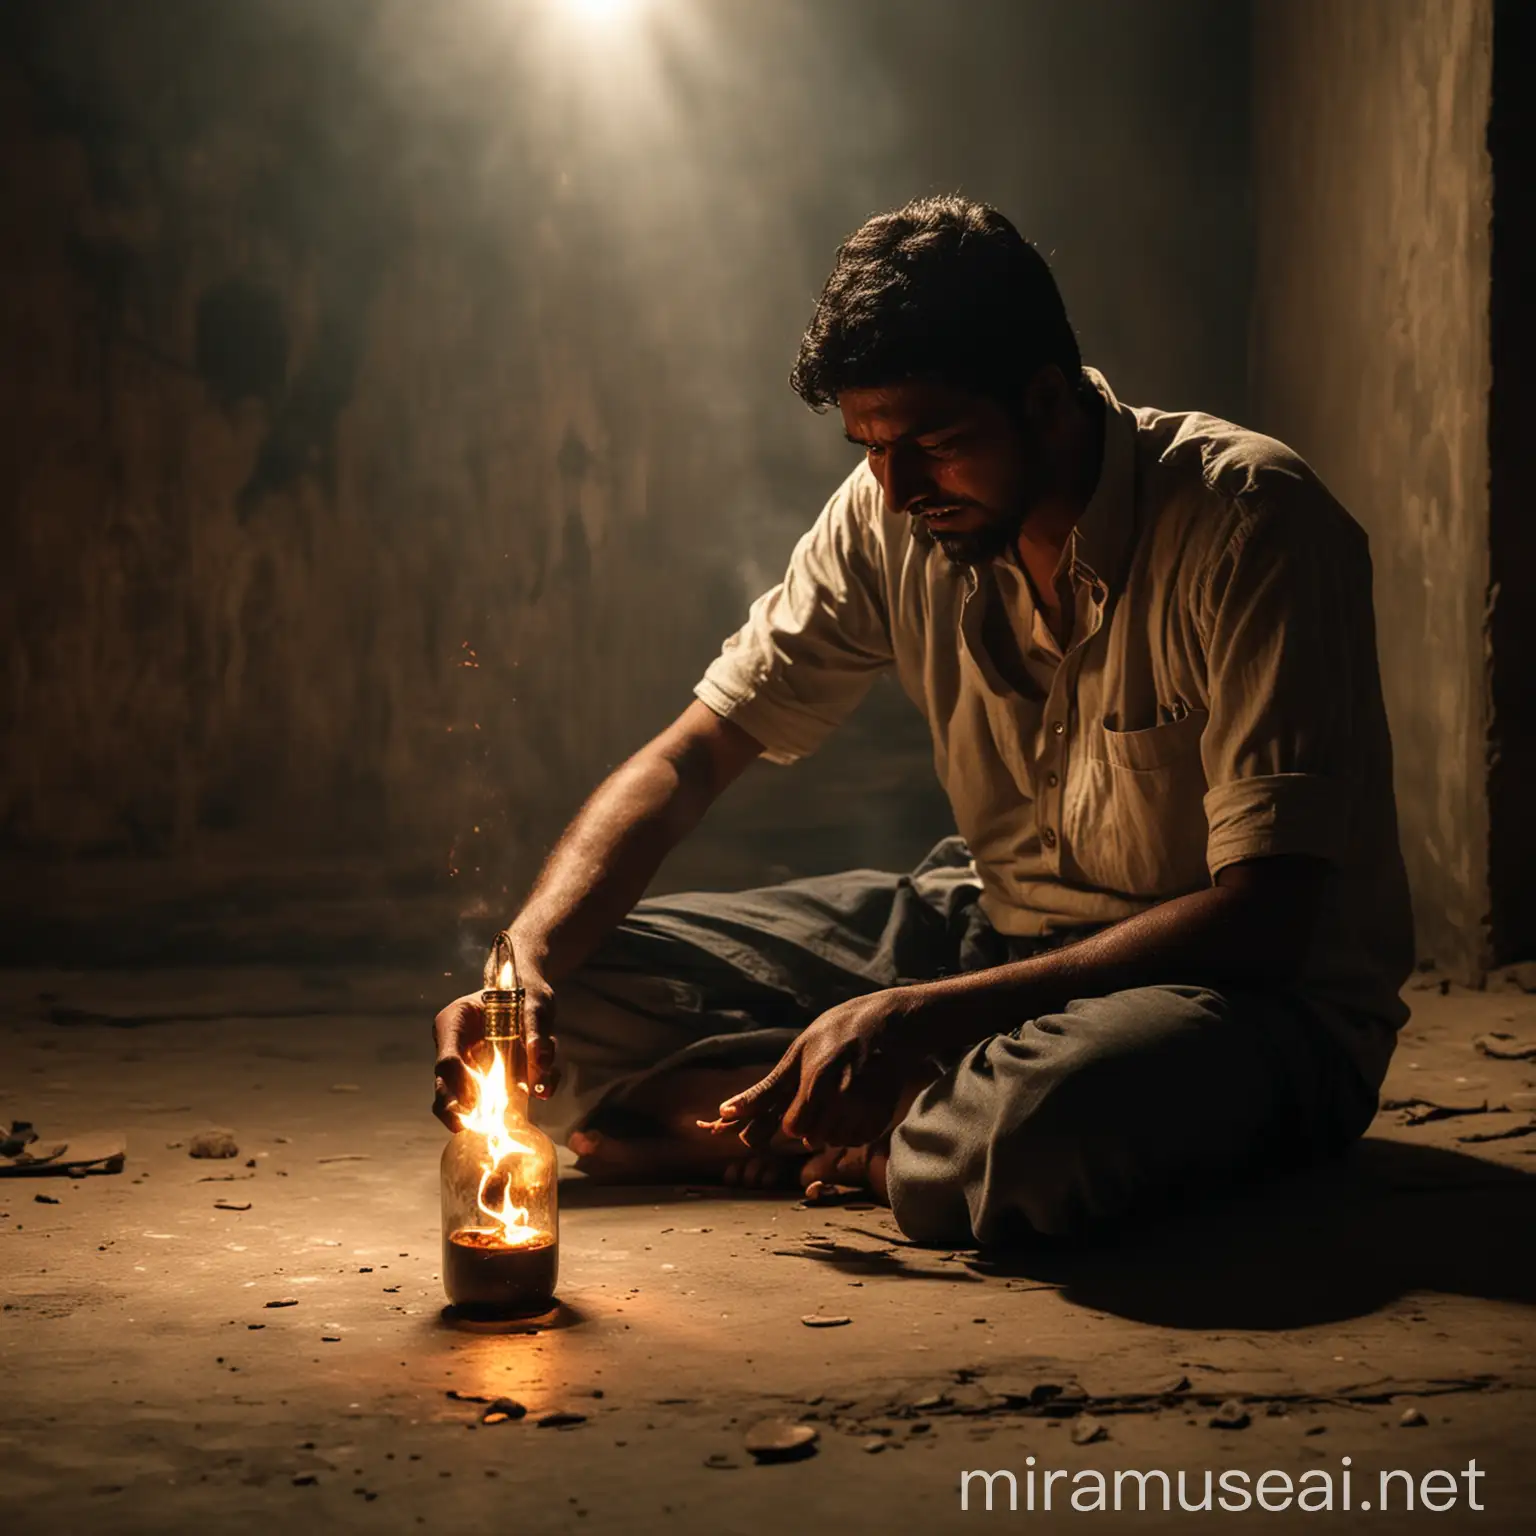 a indian men sitting on floor, cying, focus on fire in bottle, bottle in a man hand, dark room